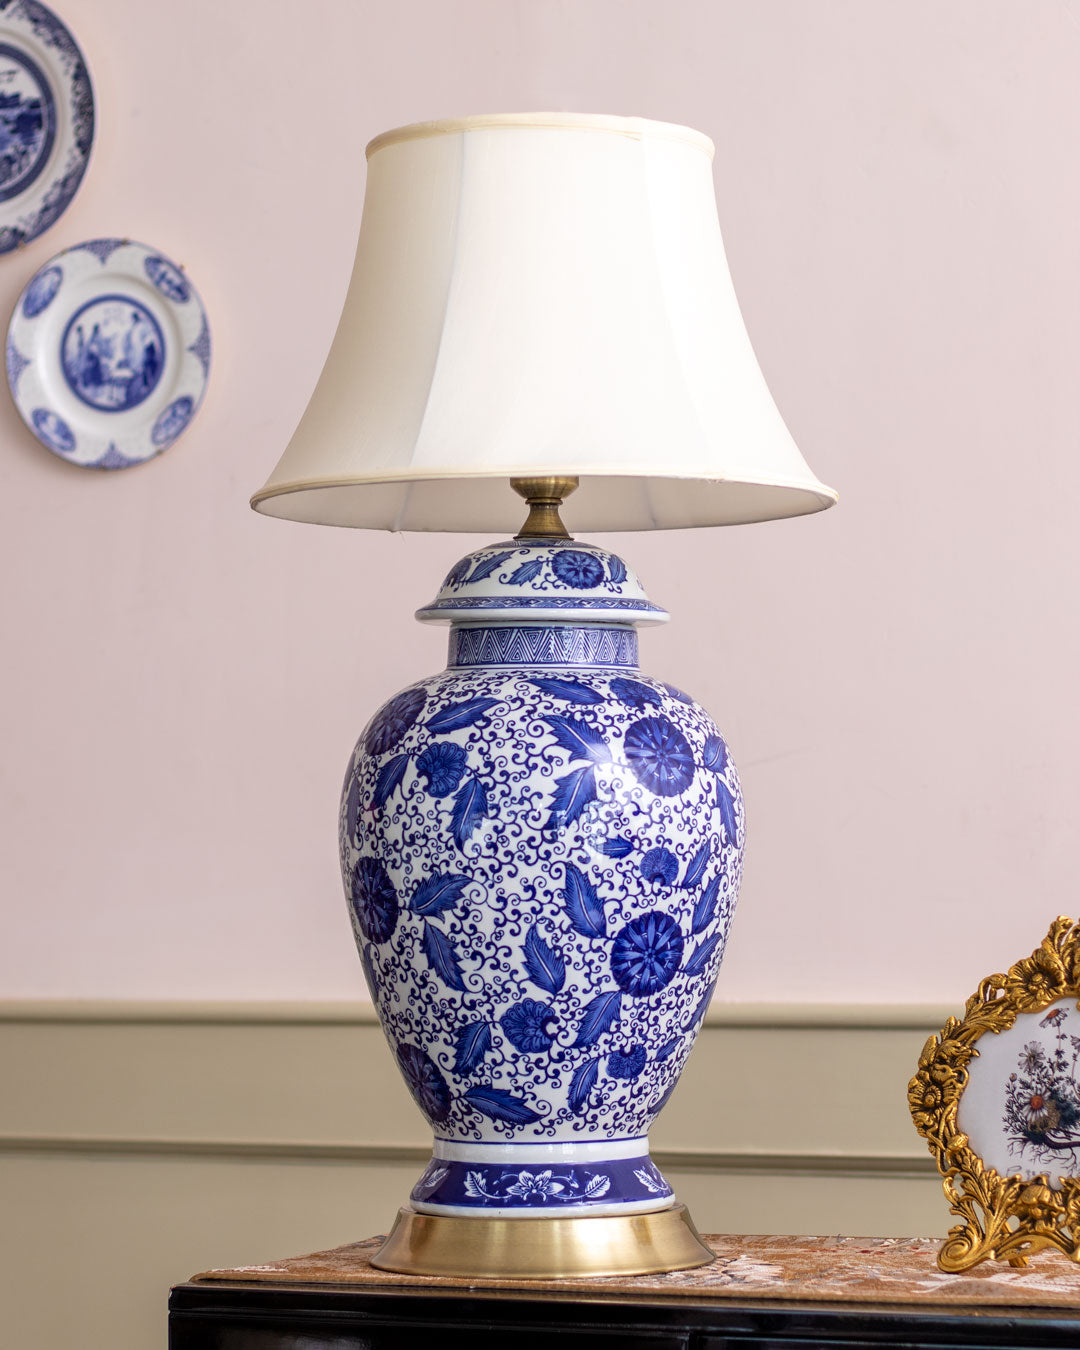 'Foliage' Porcelain Table Lamp